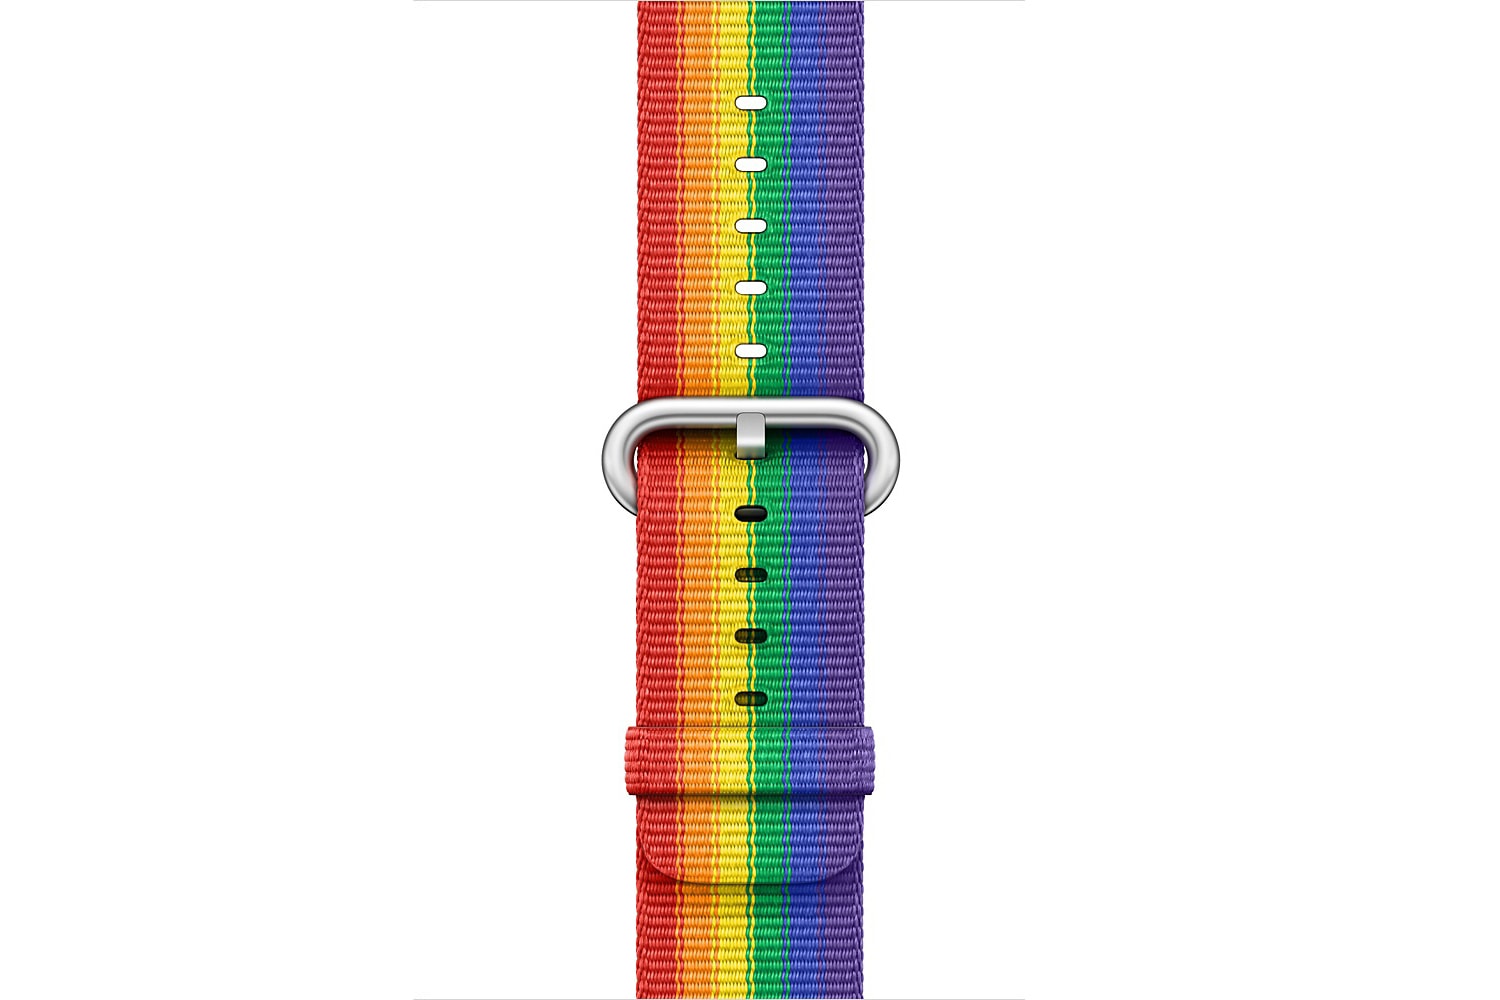 大愛同行－Apple Watch 最新「Pride Edition」別注錶帶上架